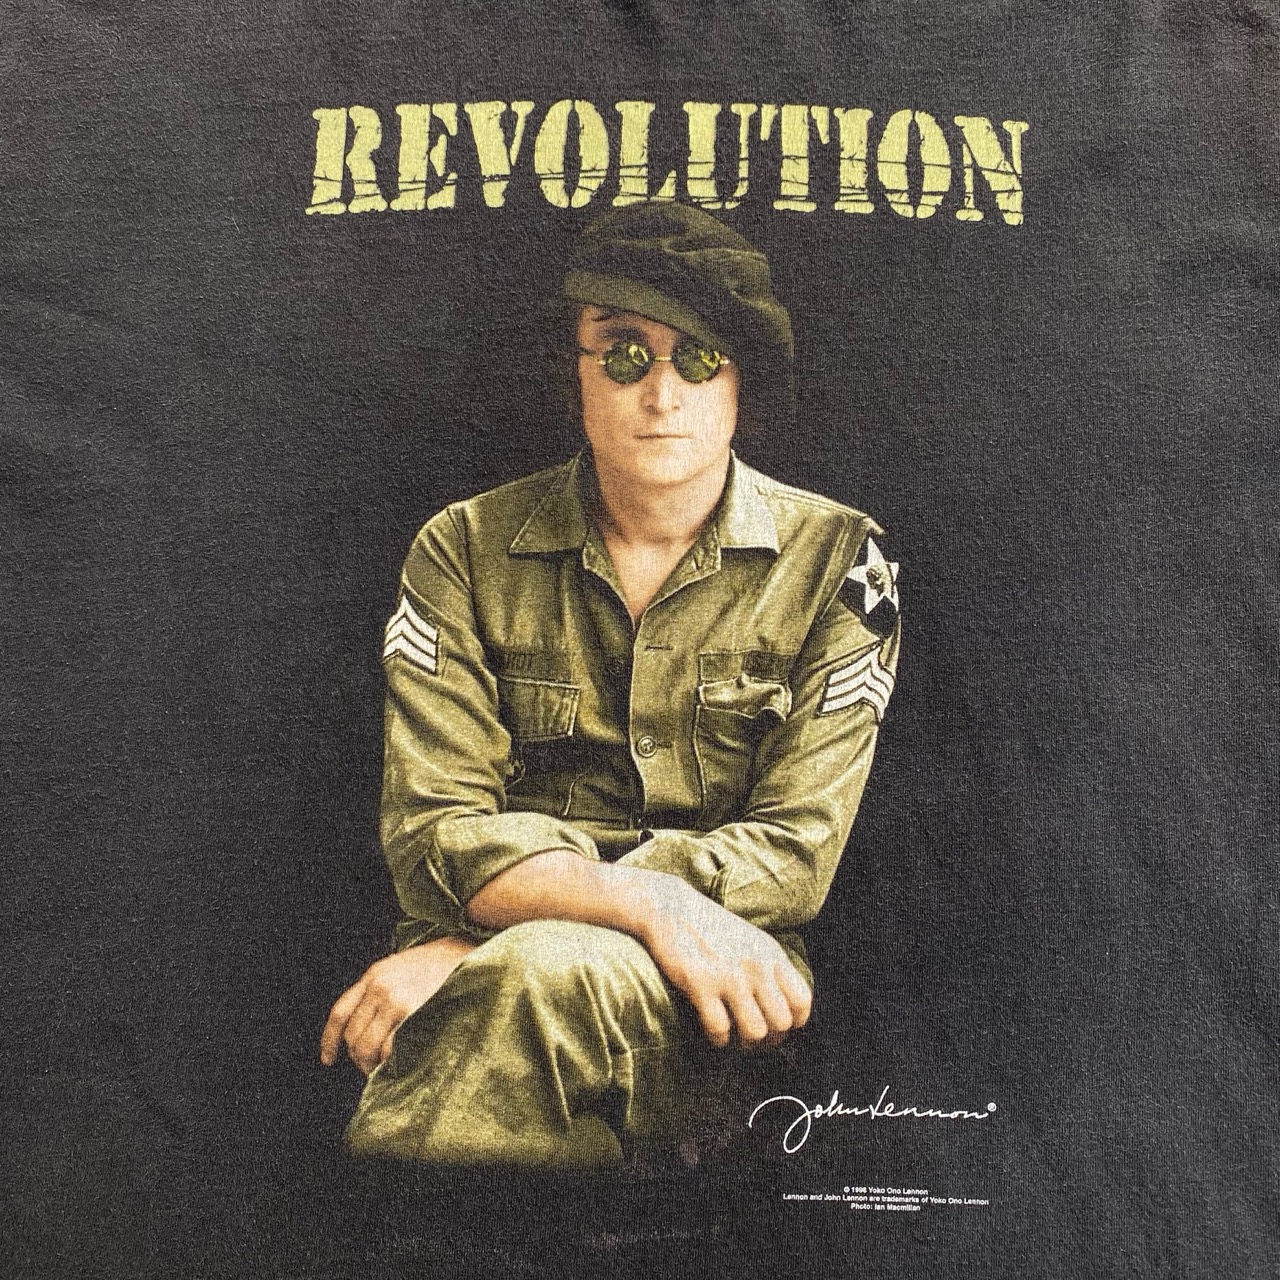 Alstyle Apparel & Activewear 90's Printed T-Shirt “John Lennon